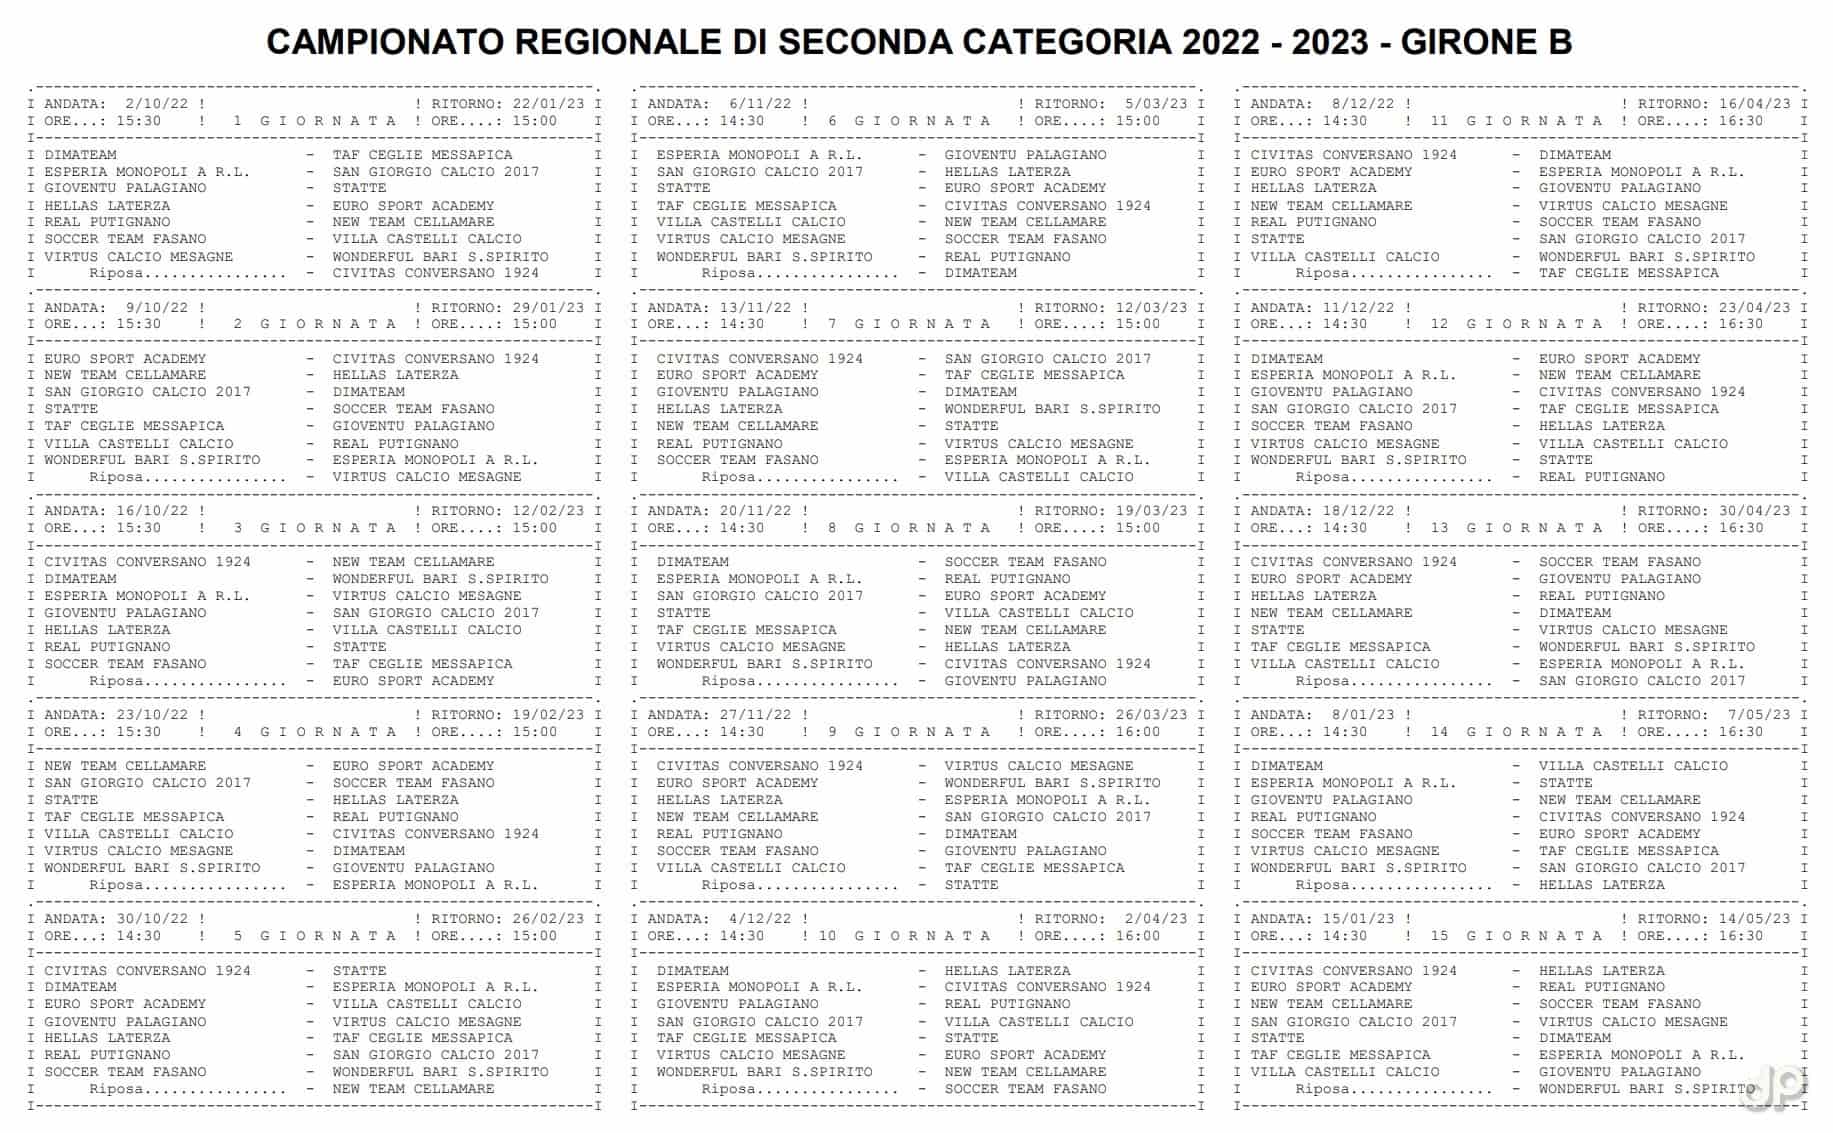 Calendario Seconda Categoria pugliese girone B 2022-23